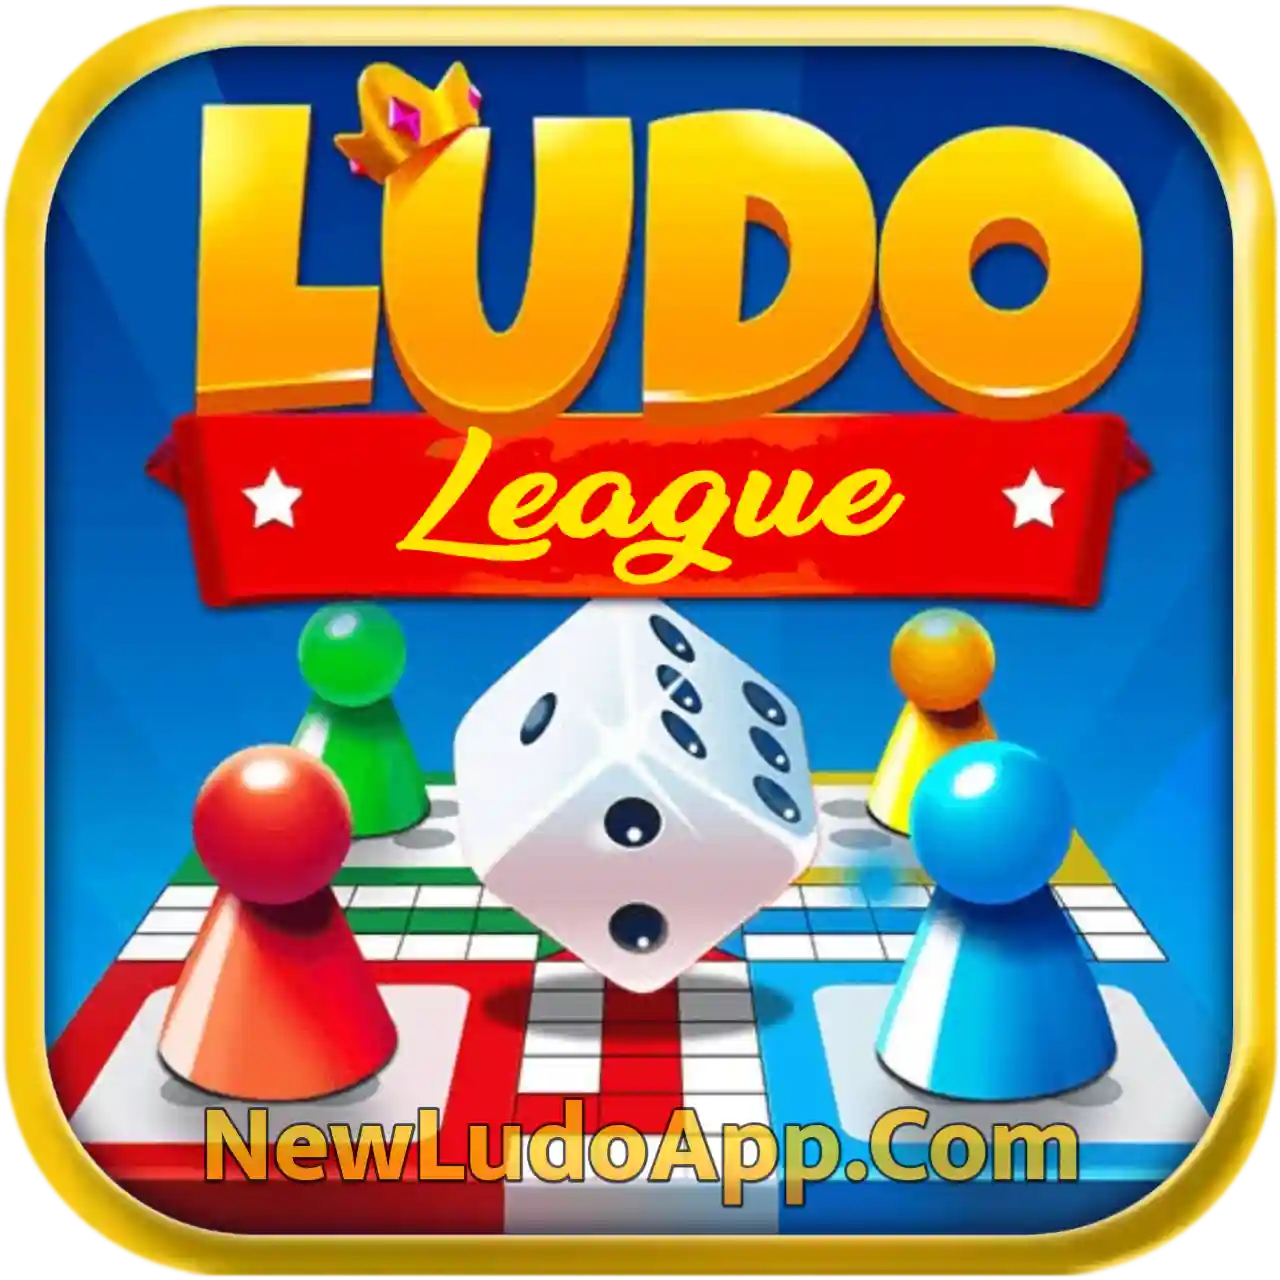 Ludo League App